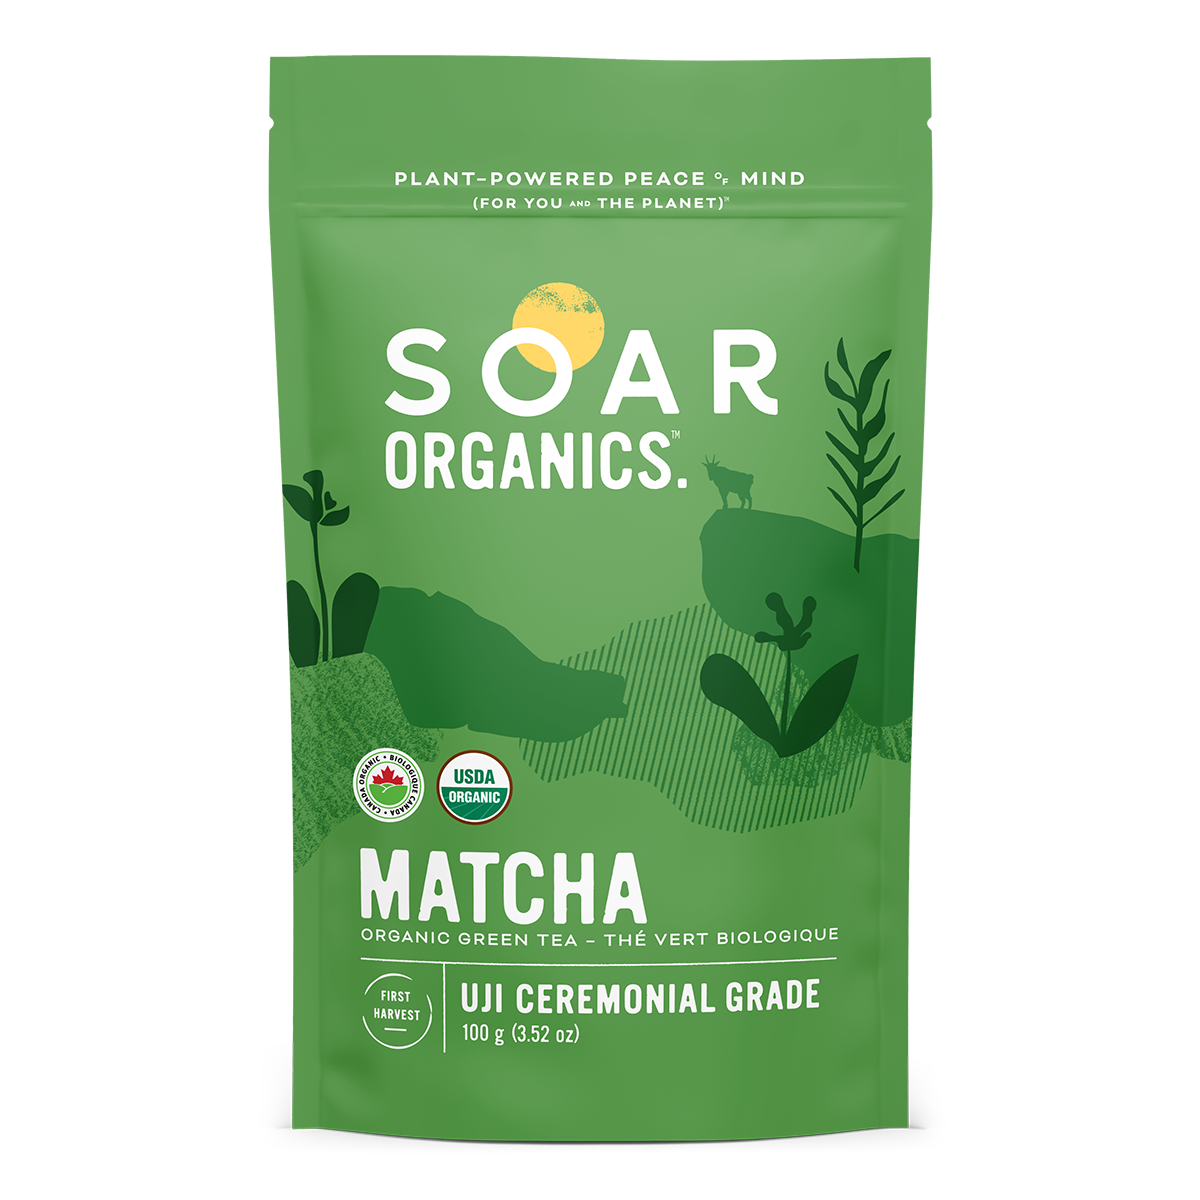 Soar Organics Uji Ceremonial Matcha 100g Front